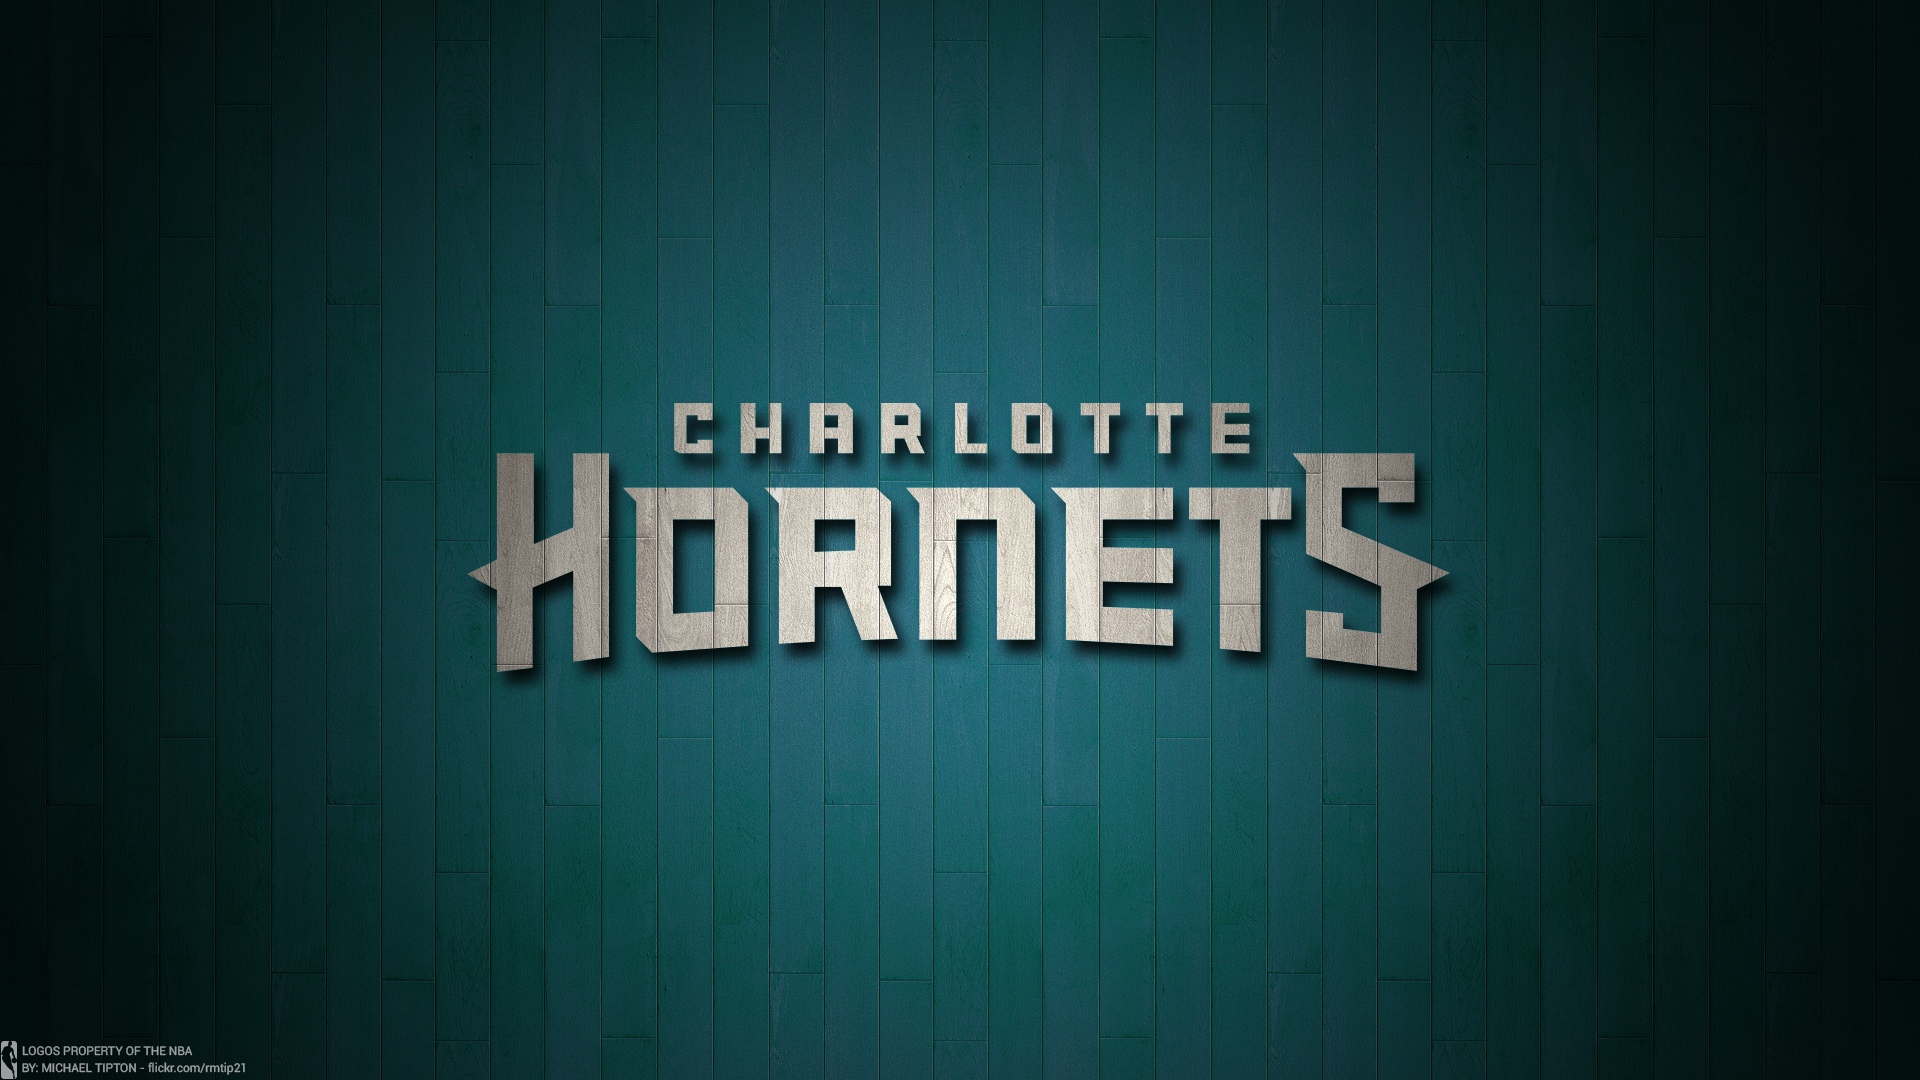 Charlotte Hornets Basketball Team by Michael Tipton